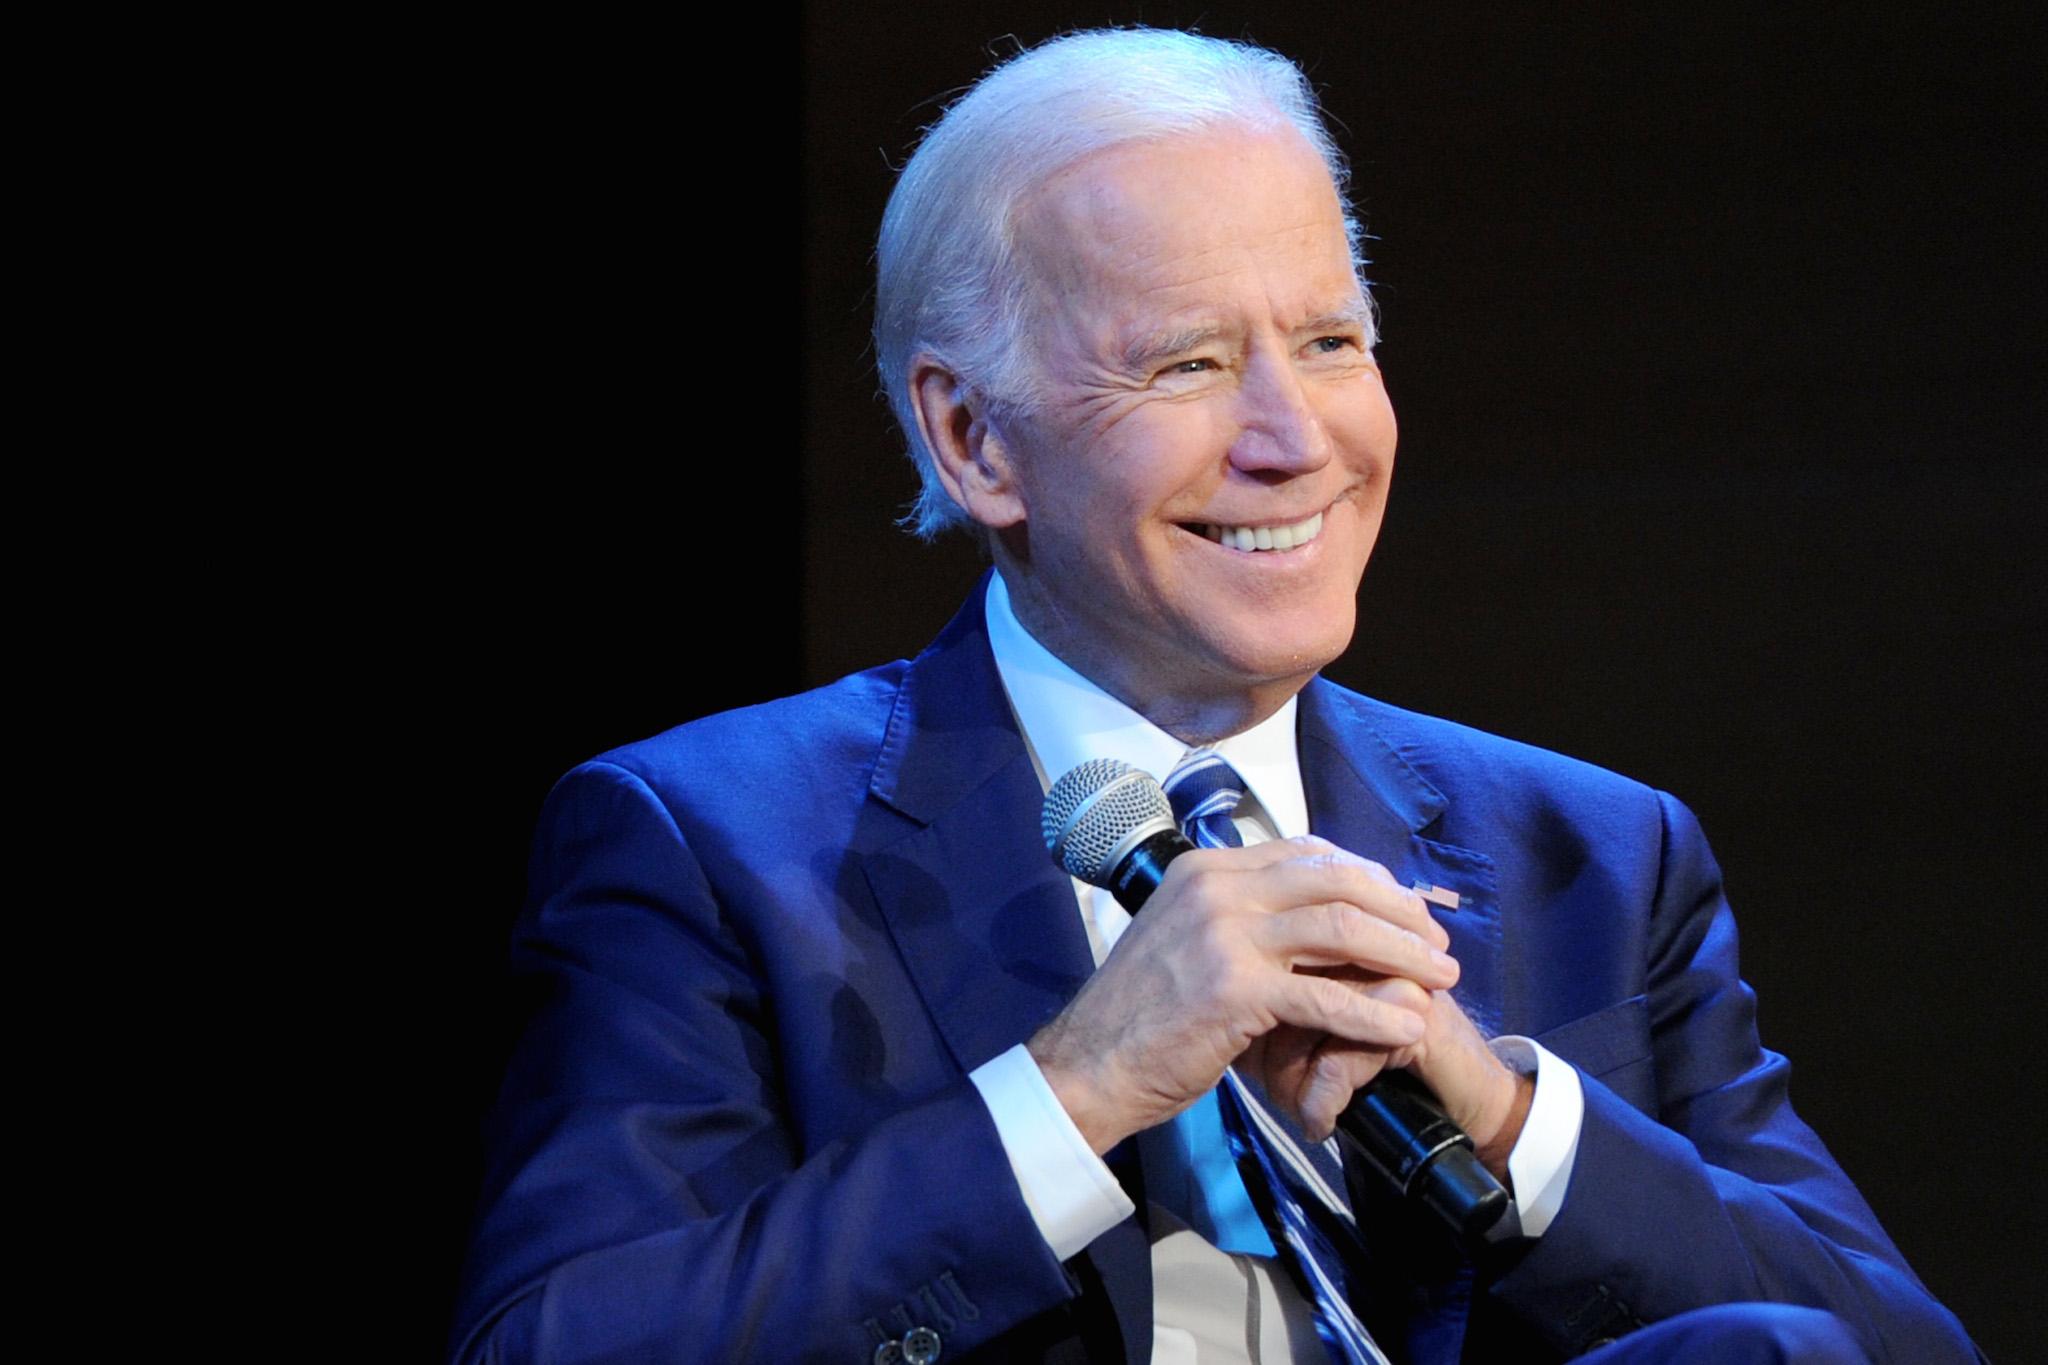 Joe Biden has not ruled out running for president in 2020